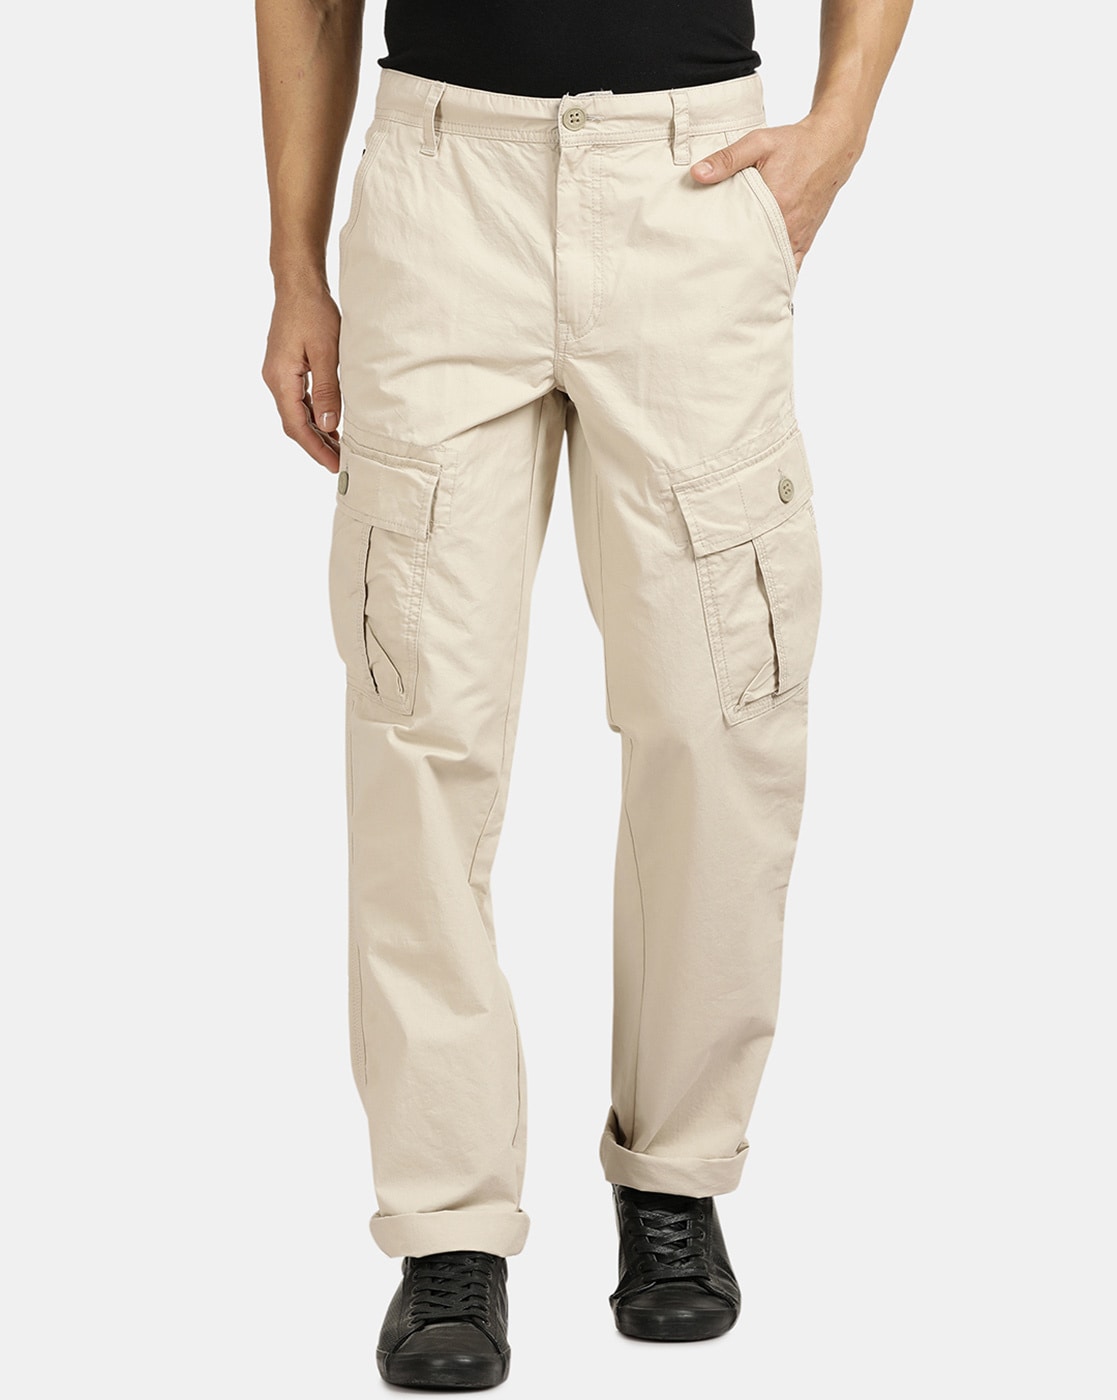 Buy Cream Trousers  Pants for Men by TBase Online  Ajiocom